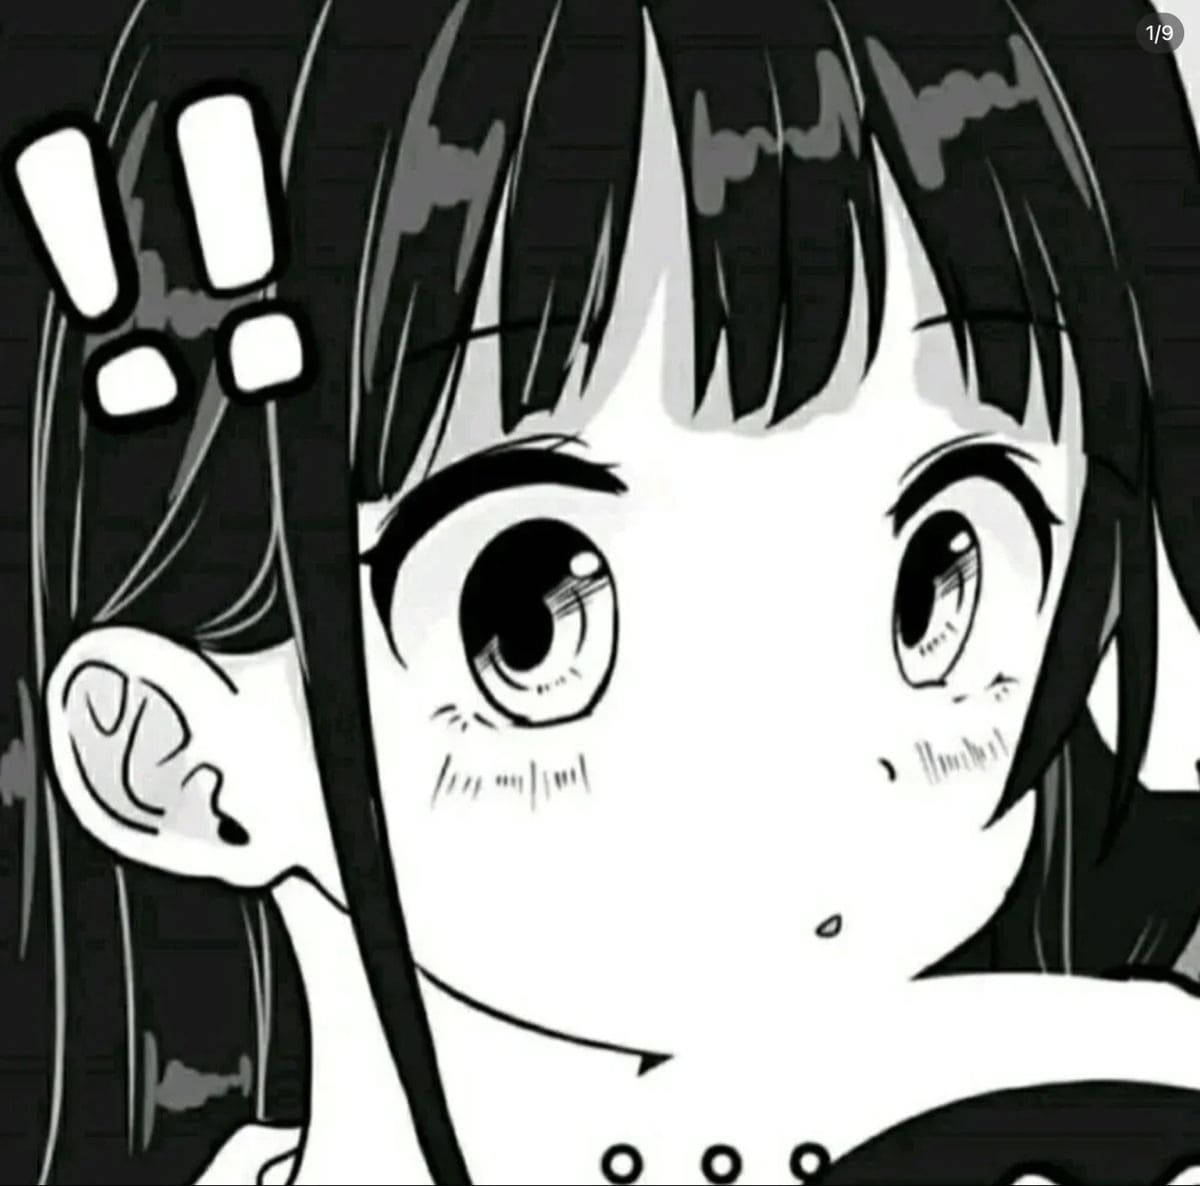 Manga PFP - Aesthetic Black and White Anime PFP for TikTok, Discord